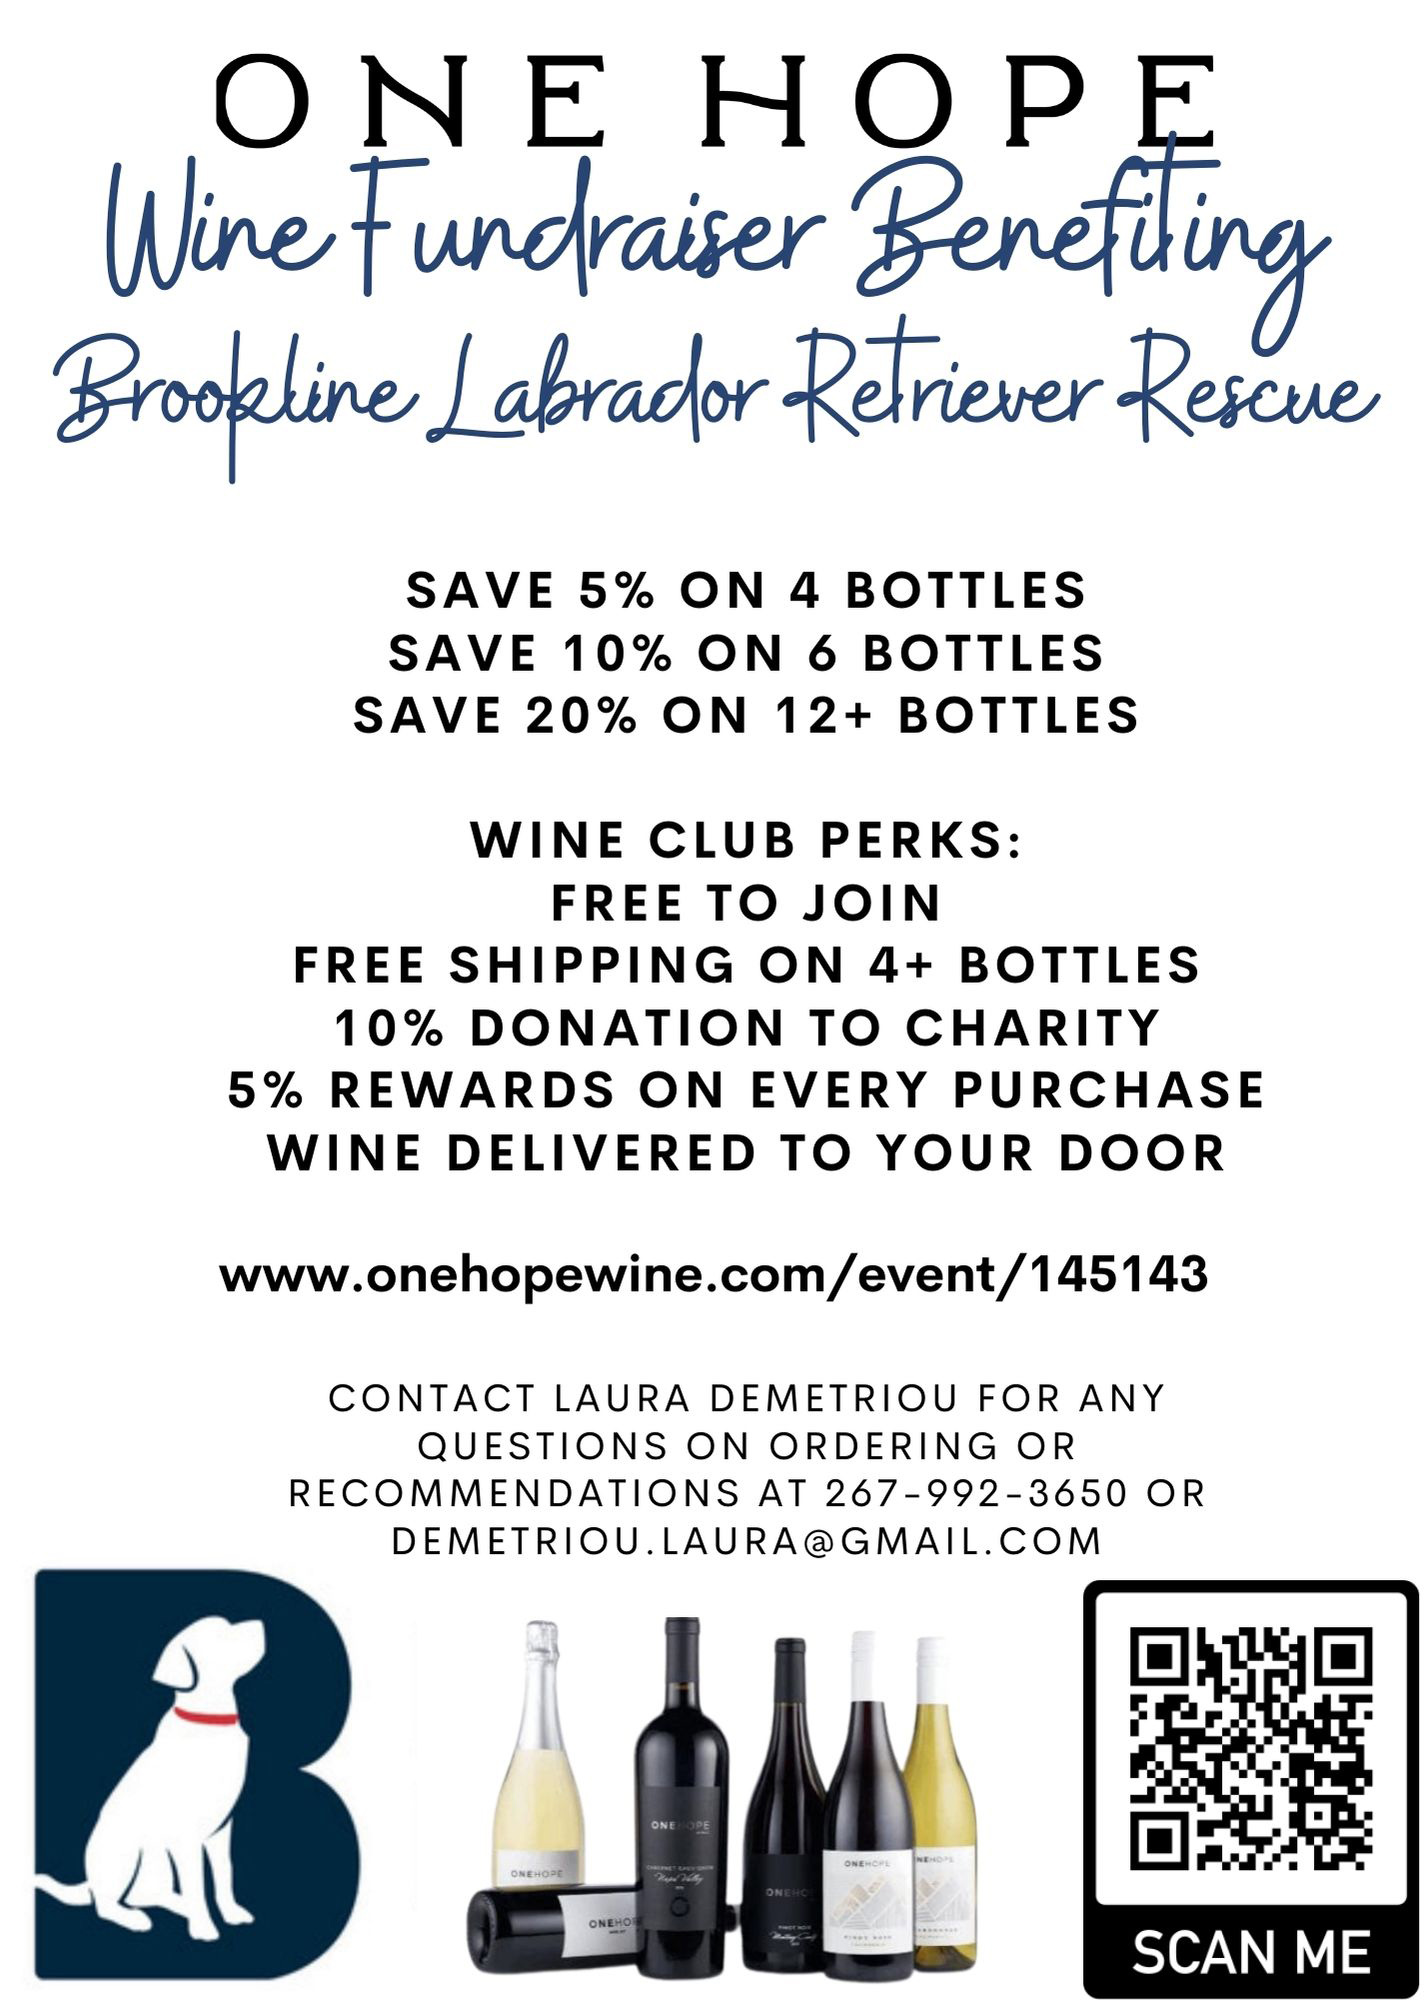 OneHope Wine fundraiser for BLRR